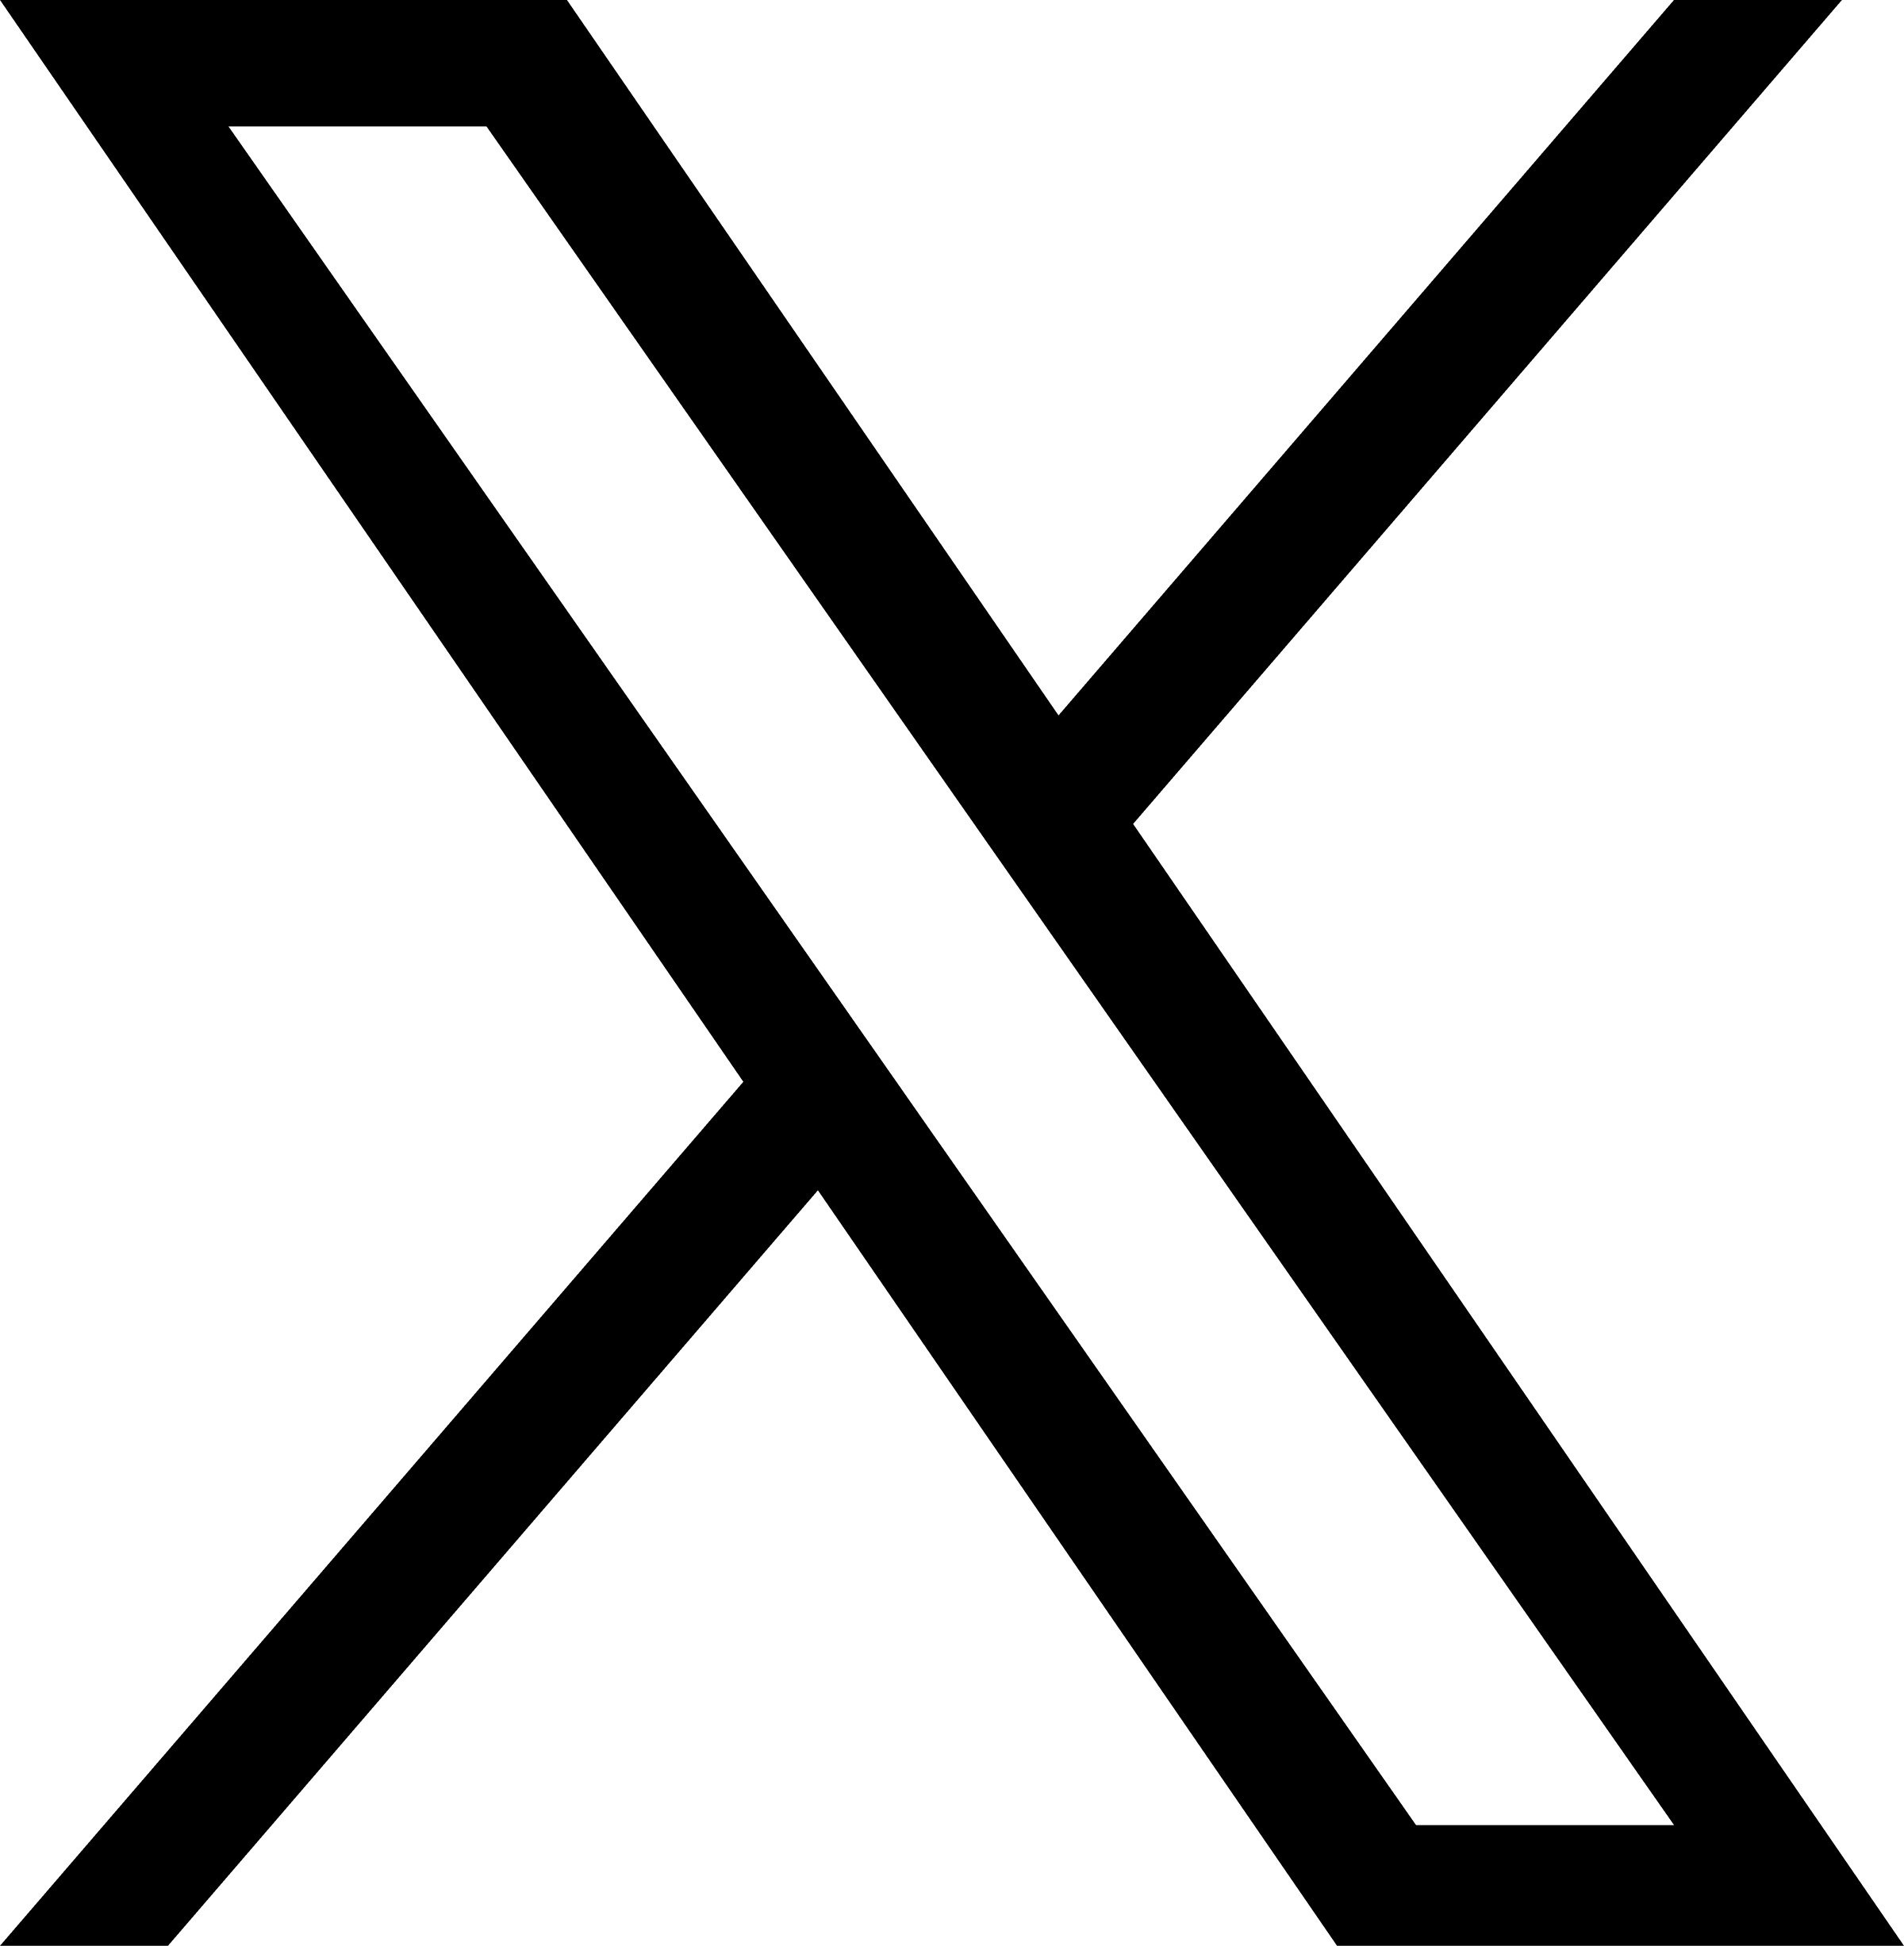 X logo in black on transparent background